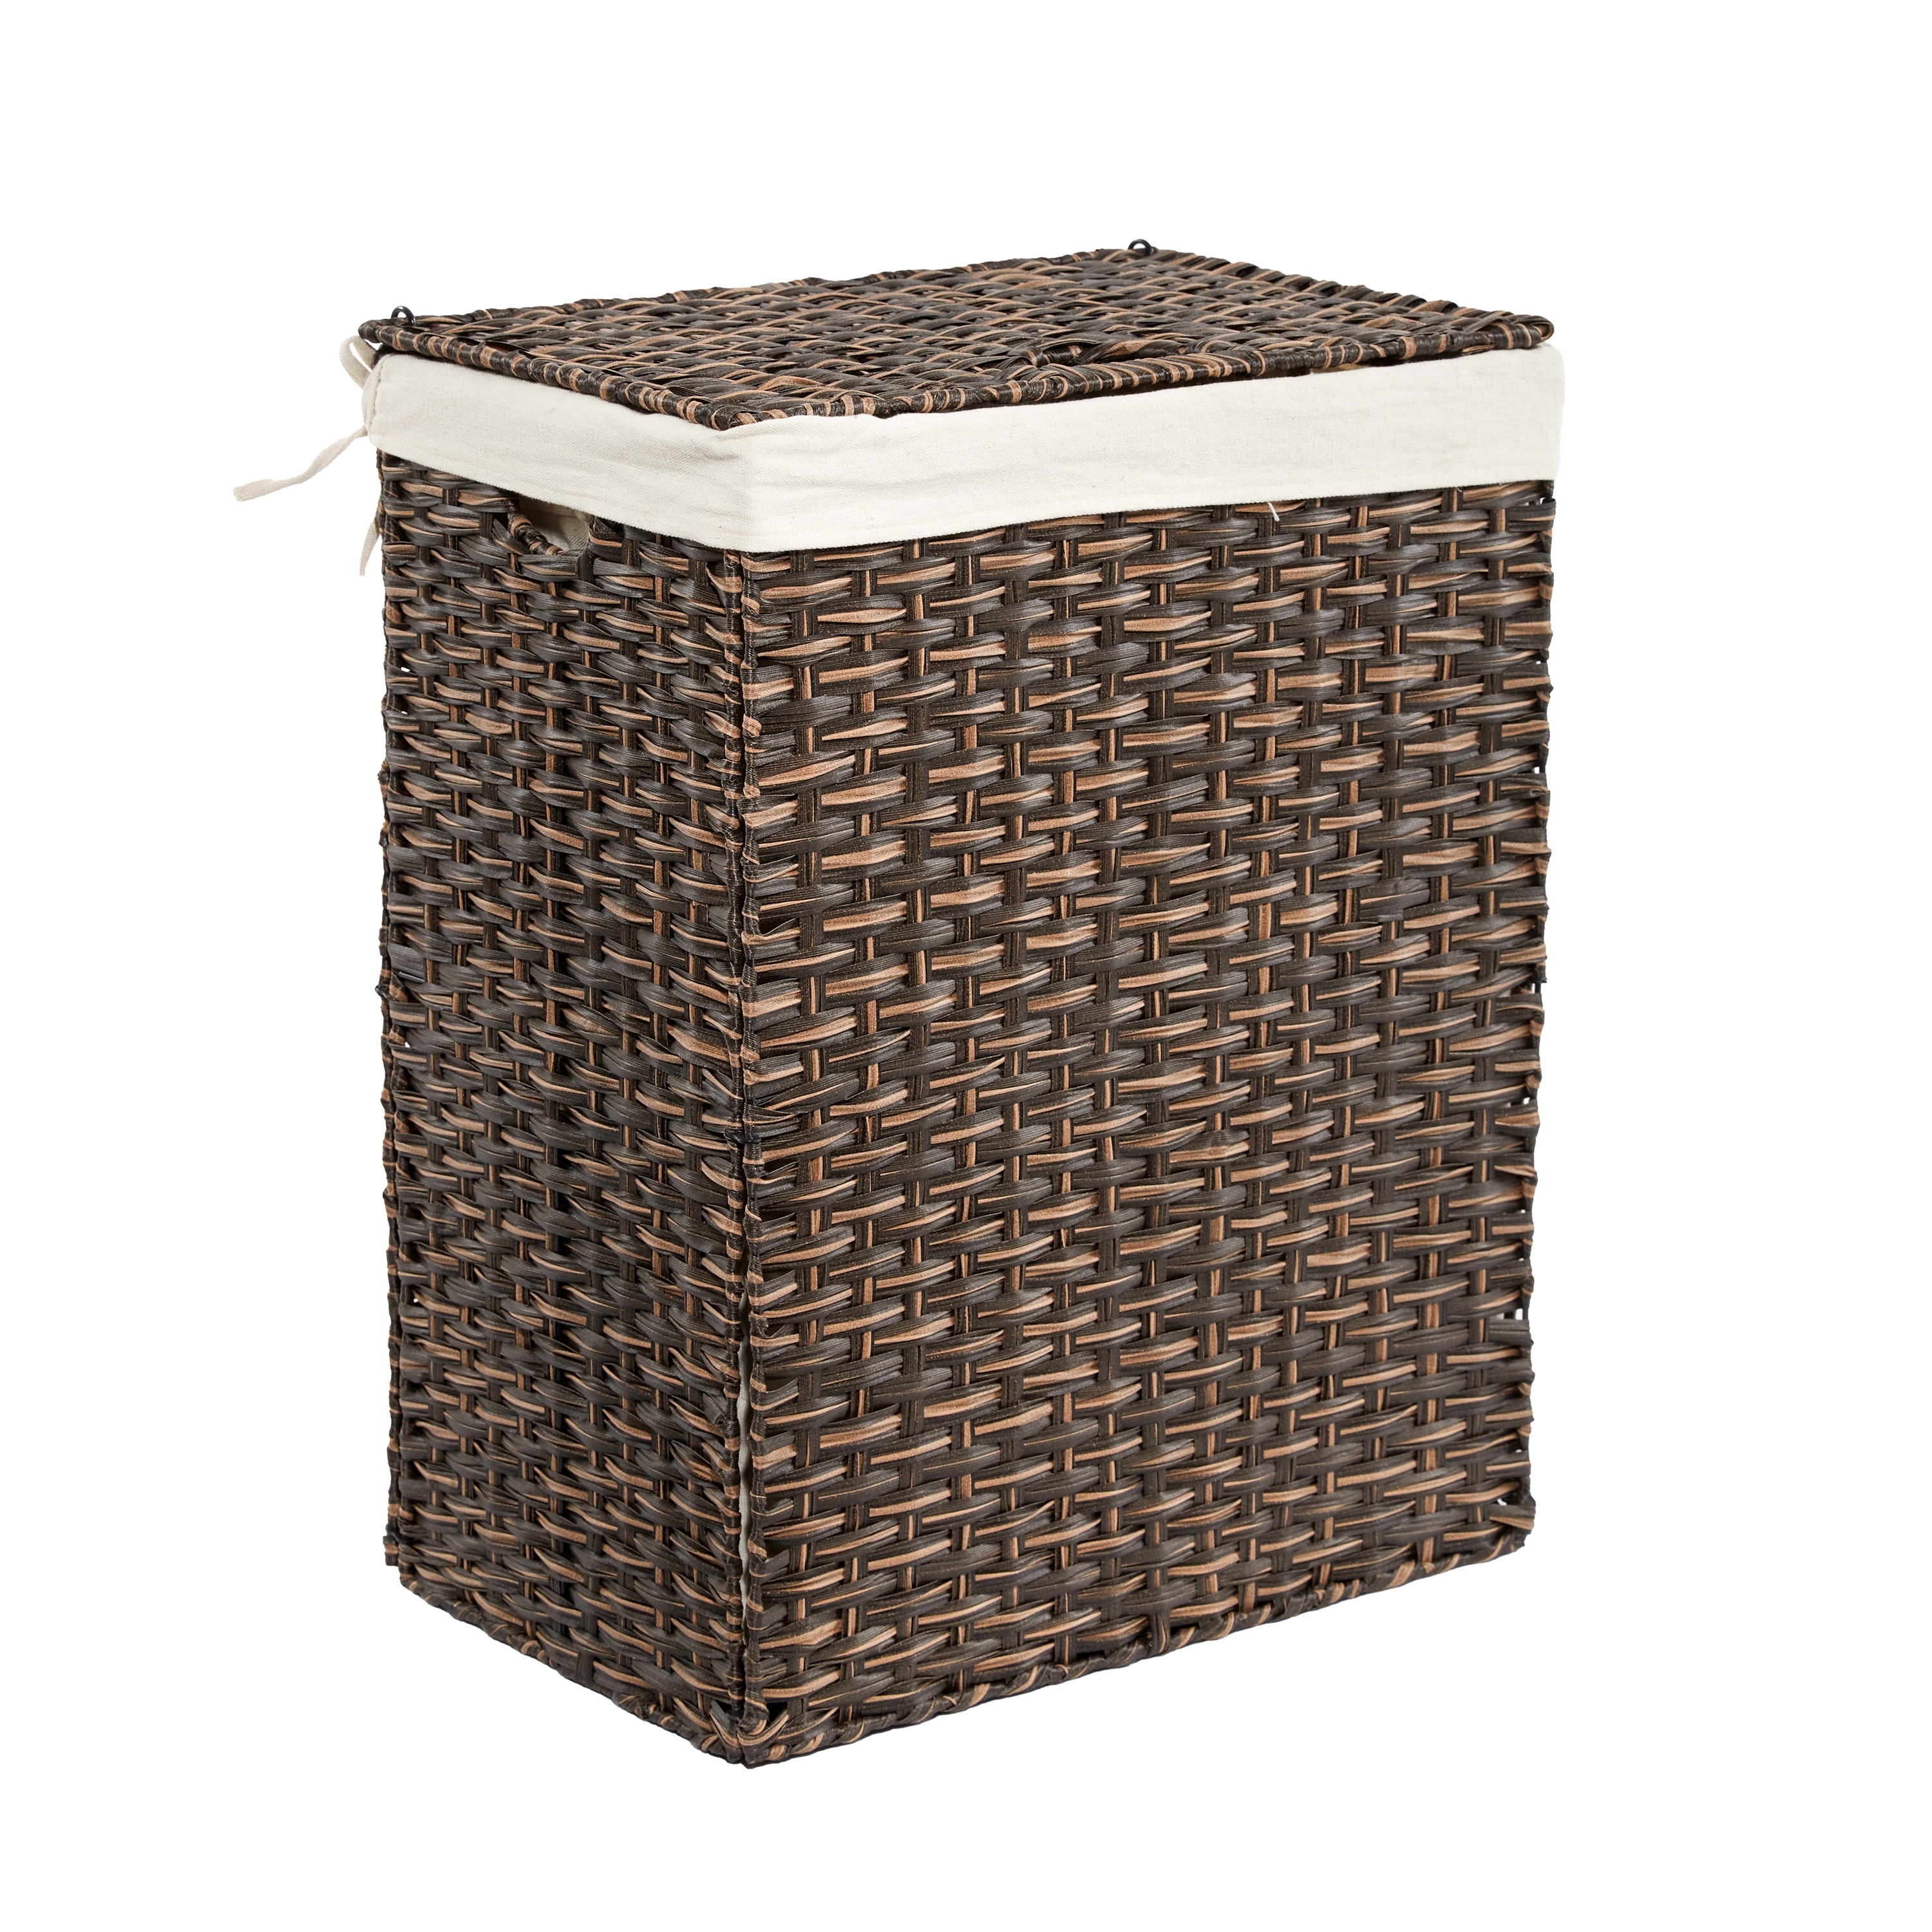 mDesign Large Collapsible Bamboo / Fabric Laundry Hamper Basket Bag